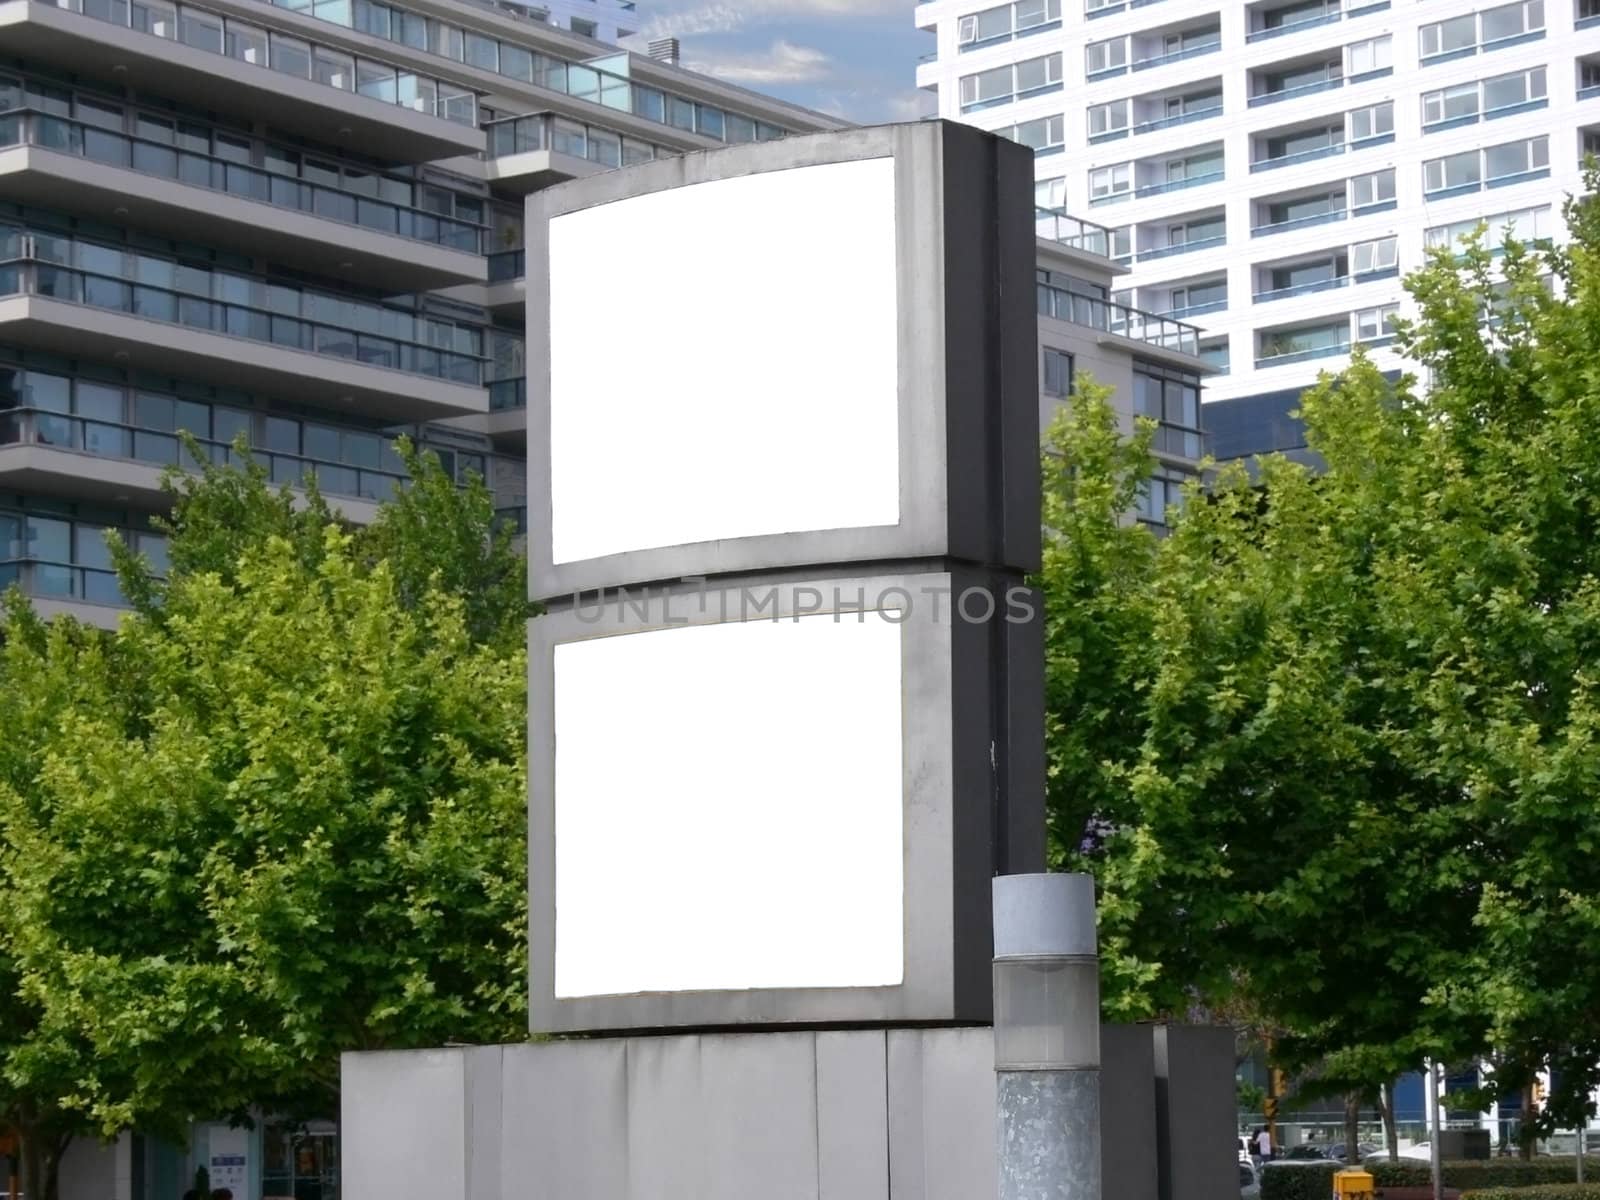 Urban double blank billboard